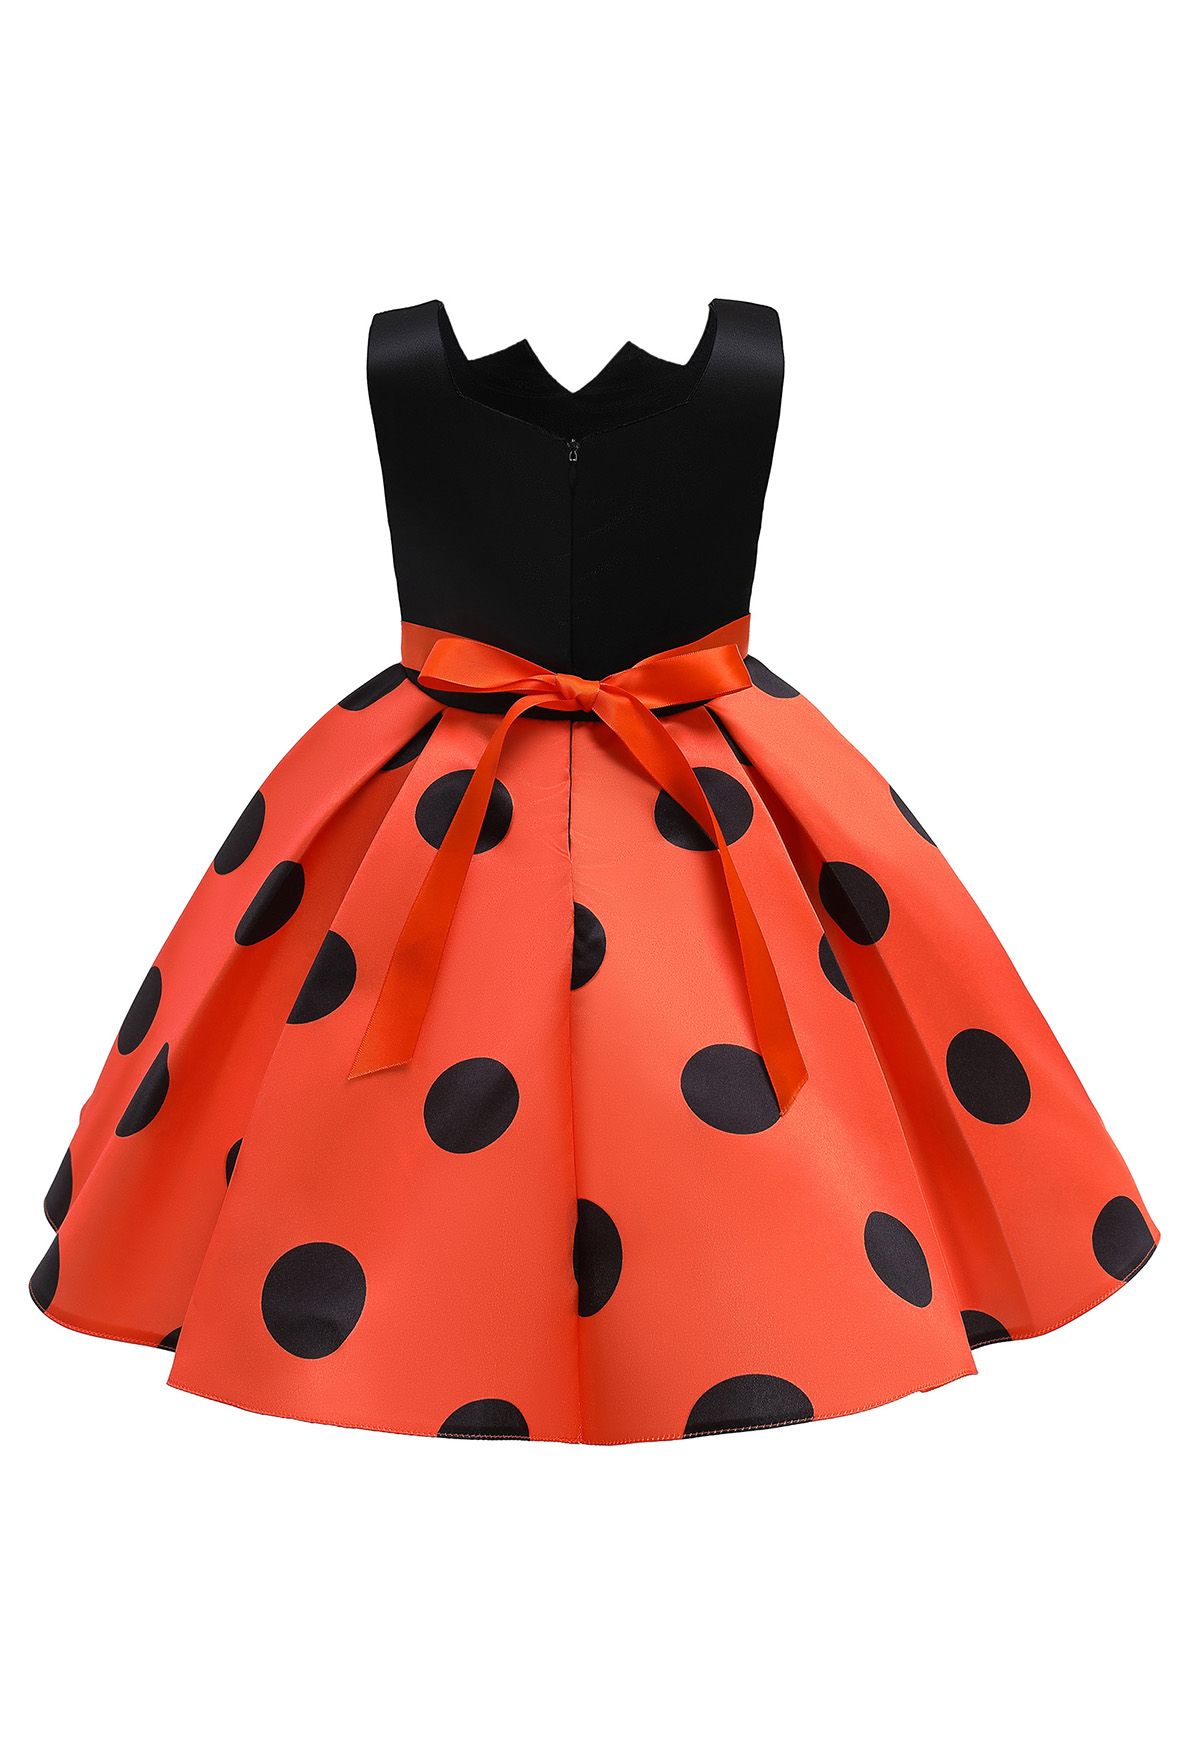 Polka Dot Bowknot Pleated Princess Dress in Orange